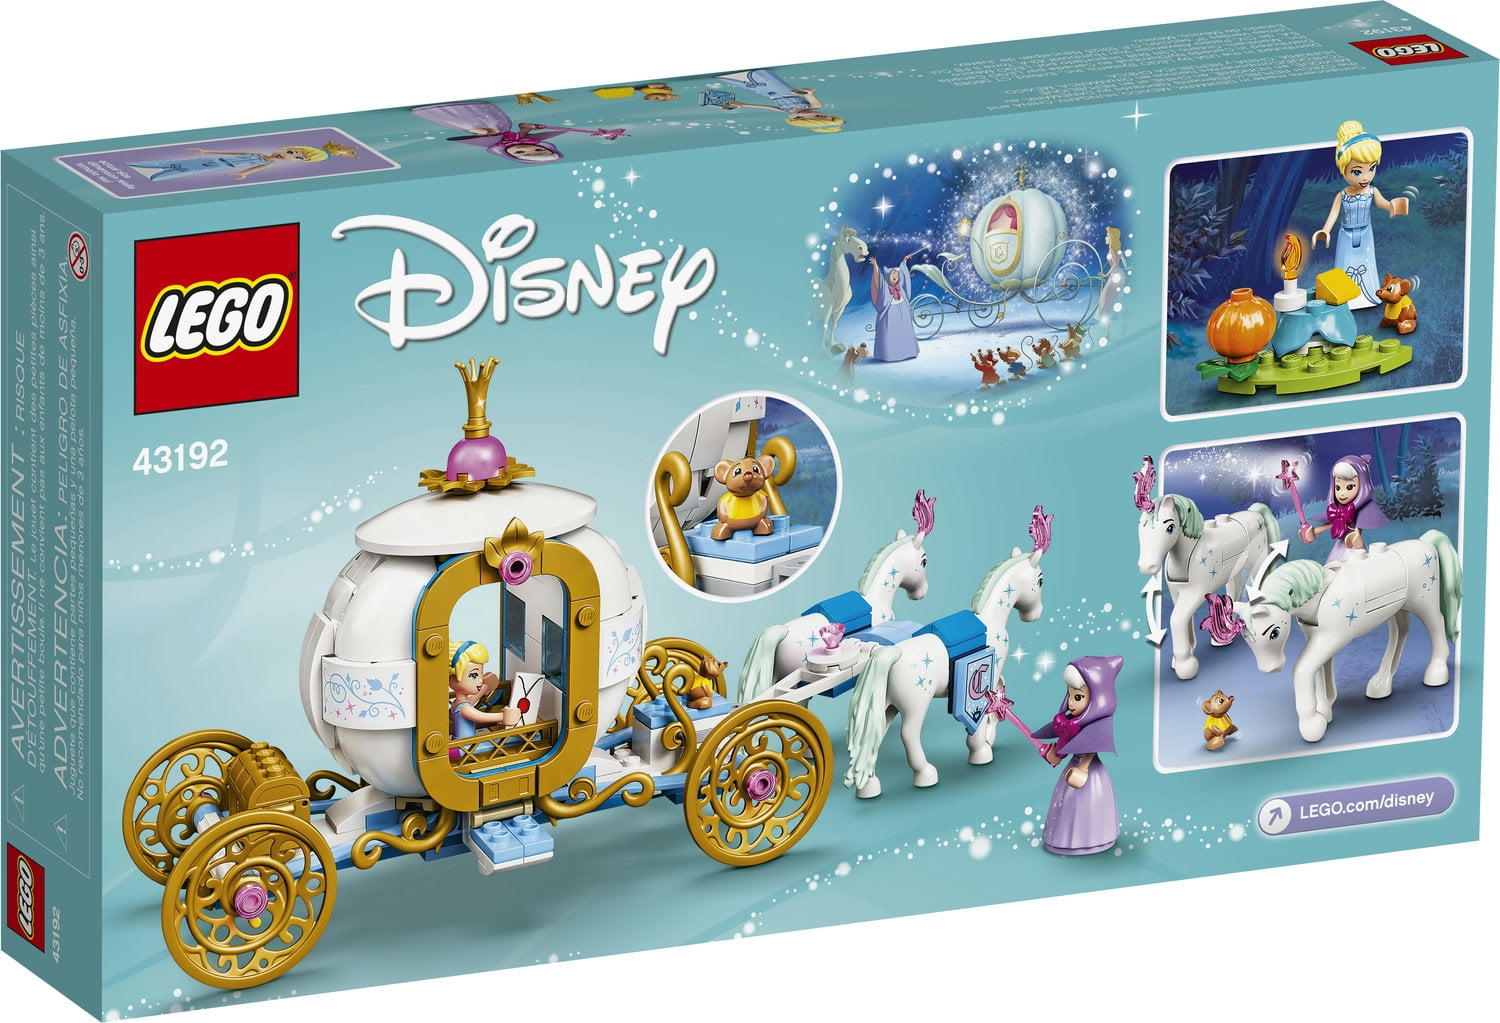 LEGO Disney Cinderella's Royal Carriage 43192; Creative Toy Makes a Great Gift (237 Pieces) - Walmart.com